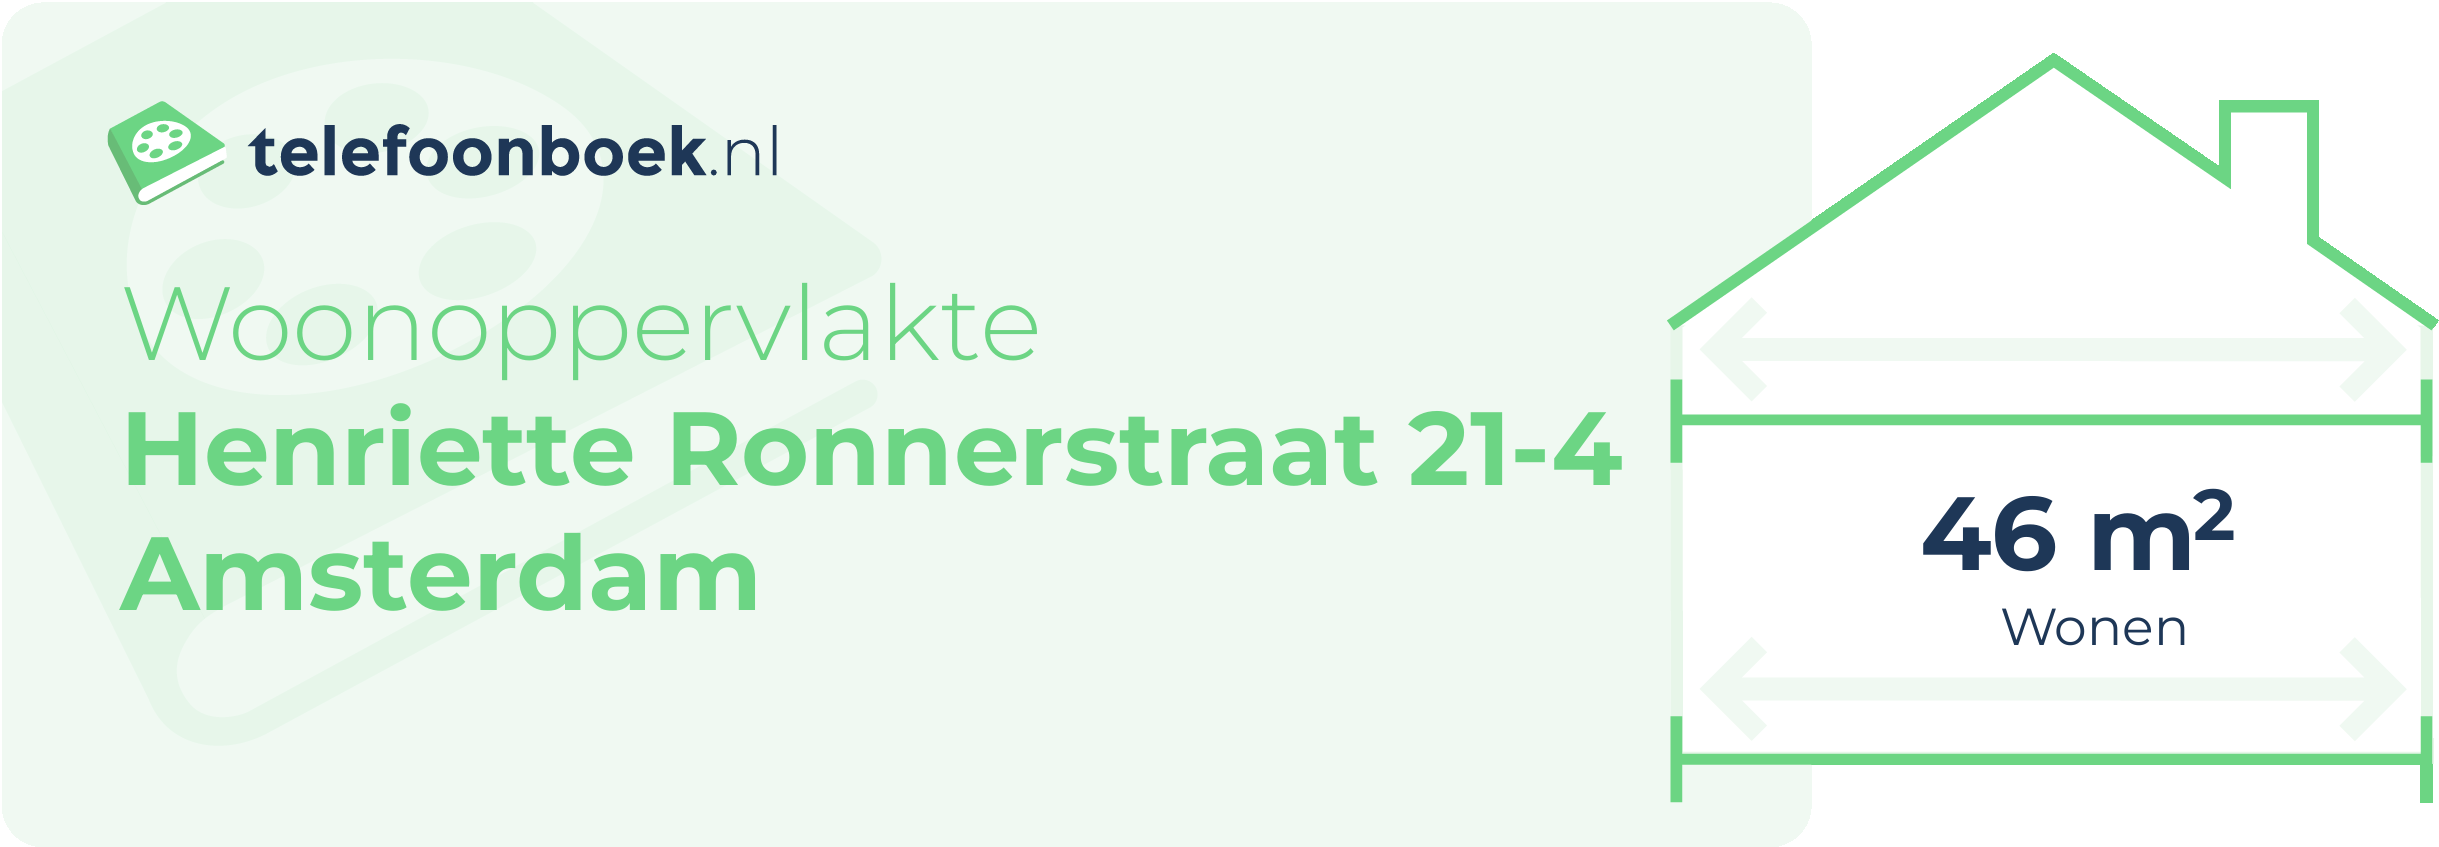 Woonoppervlakte Henriette Ronnerstraat 21-4 Amsterdam